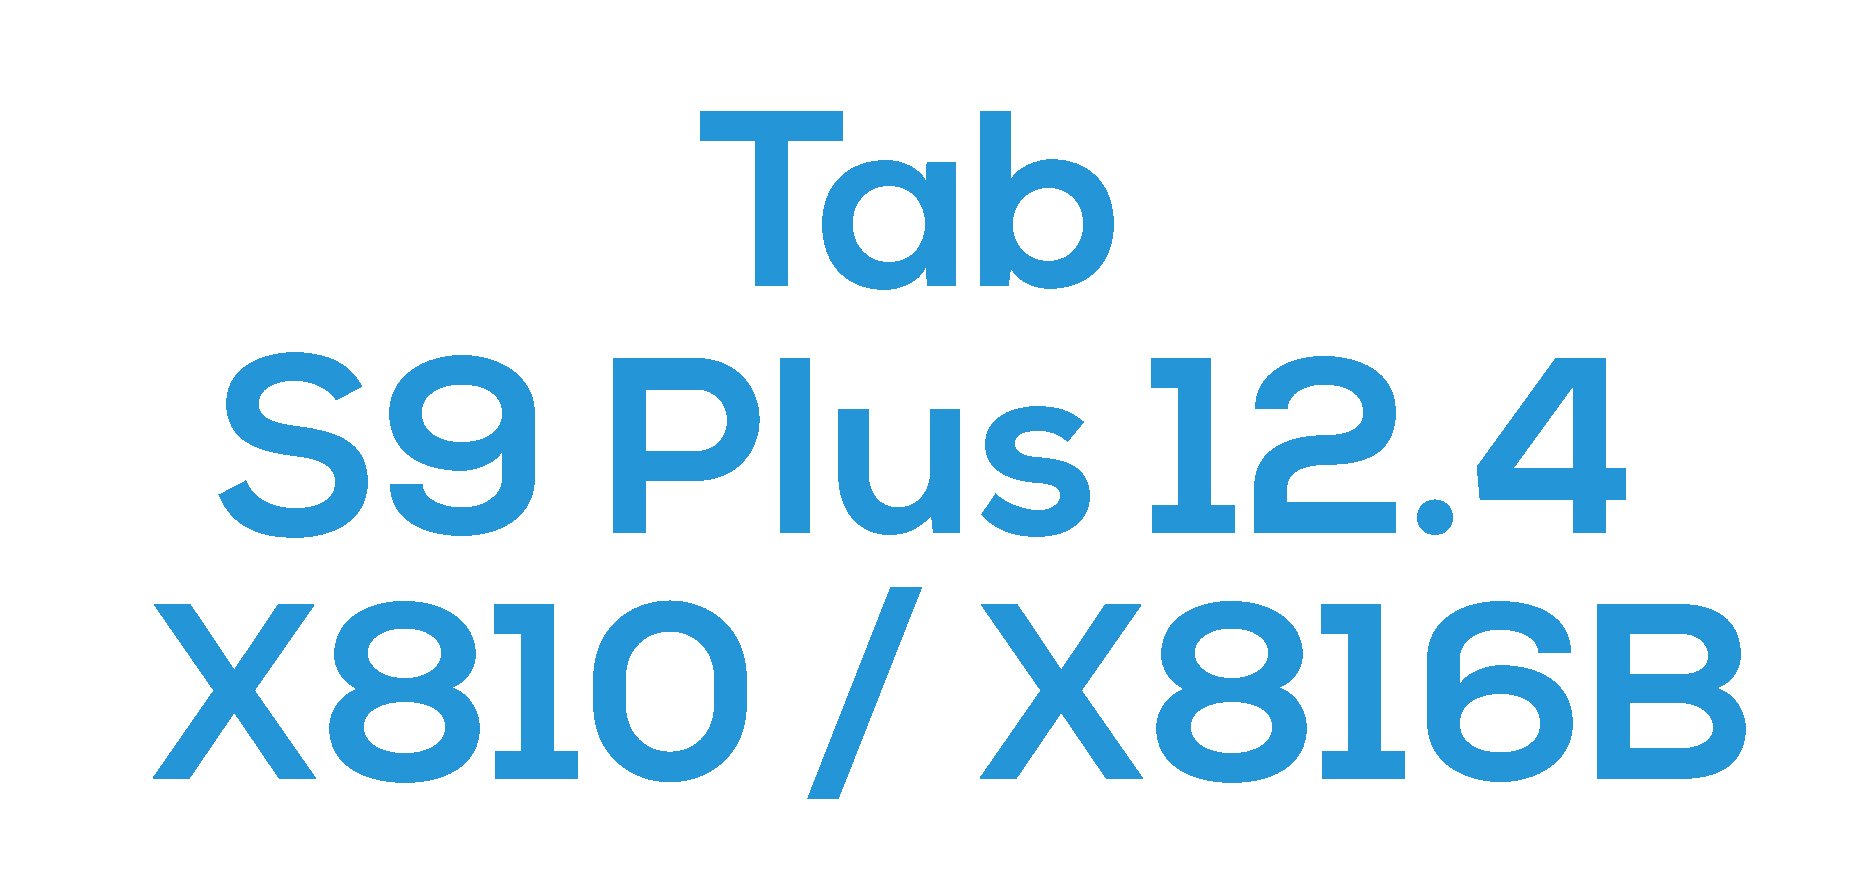 Tab S9 Plus 12.4" (X810 / X816B)